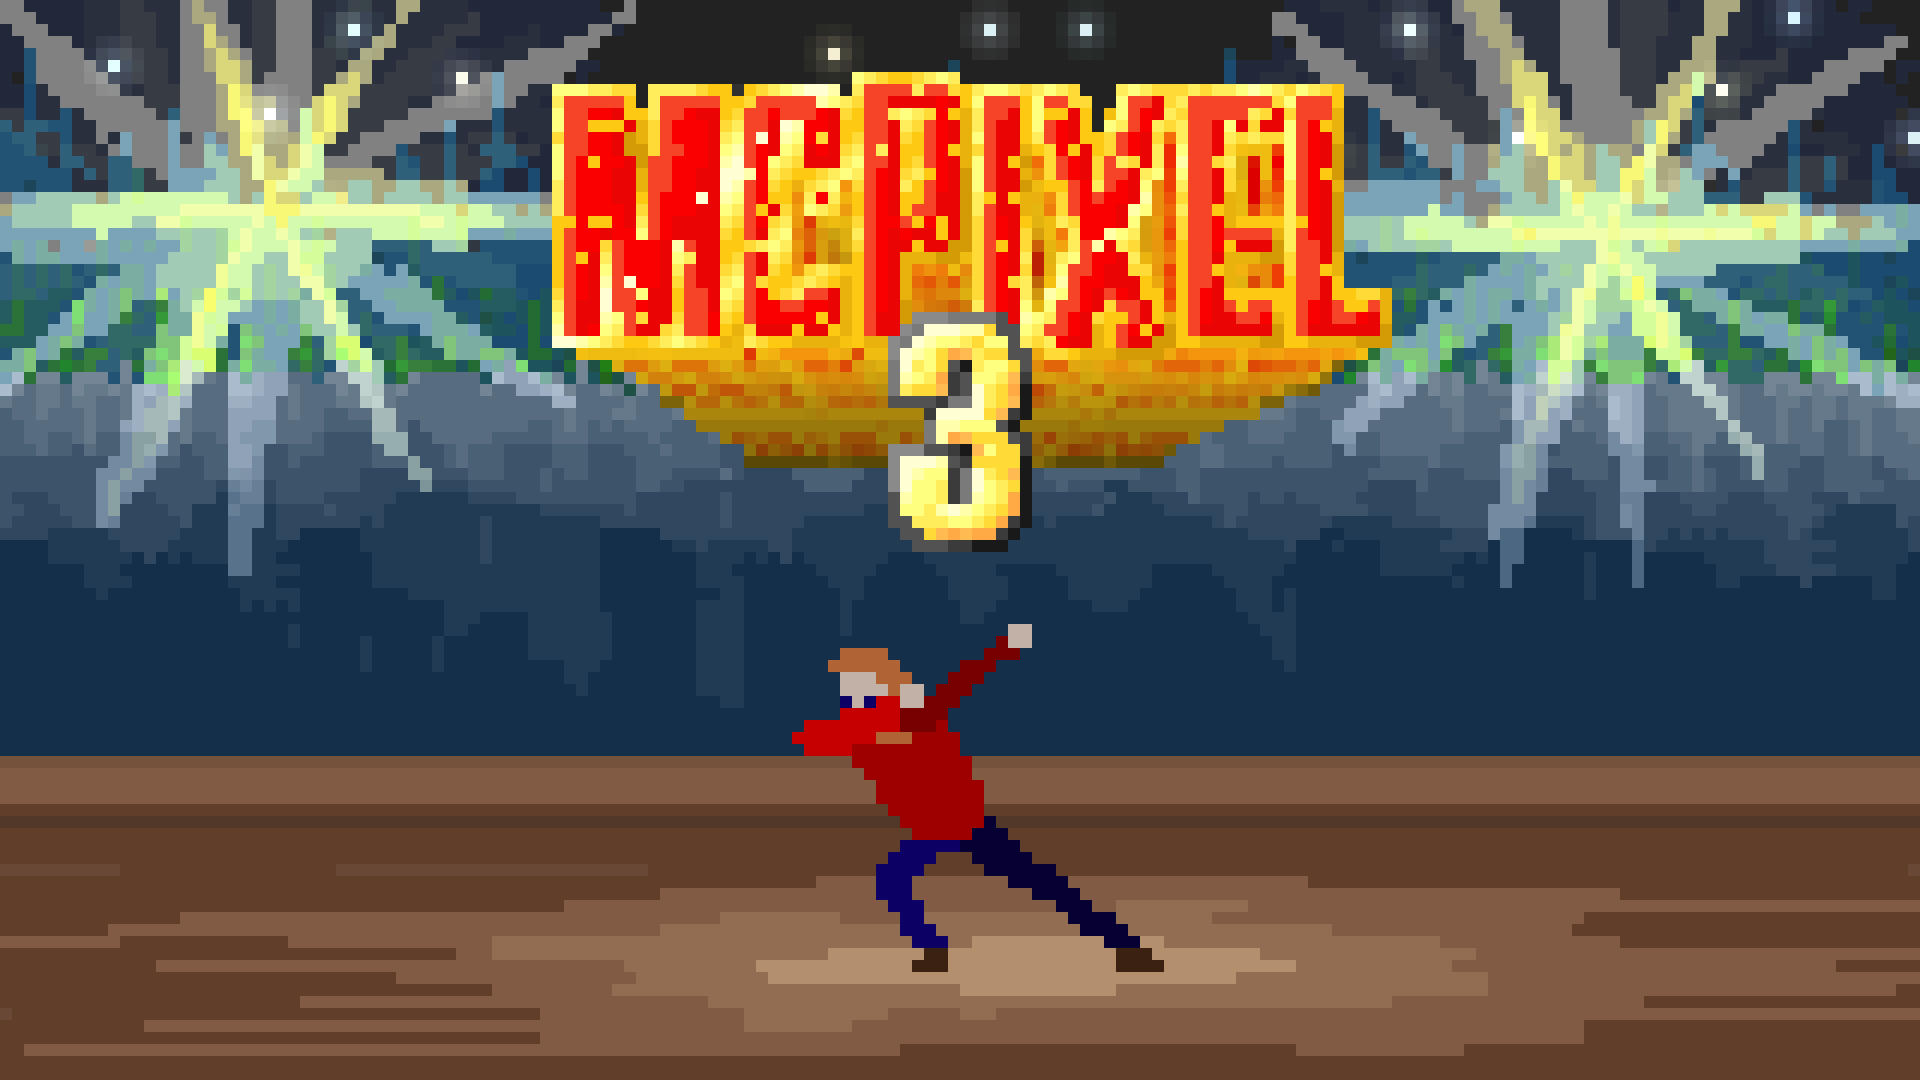 Screenshot 1 of McPixel 3 